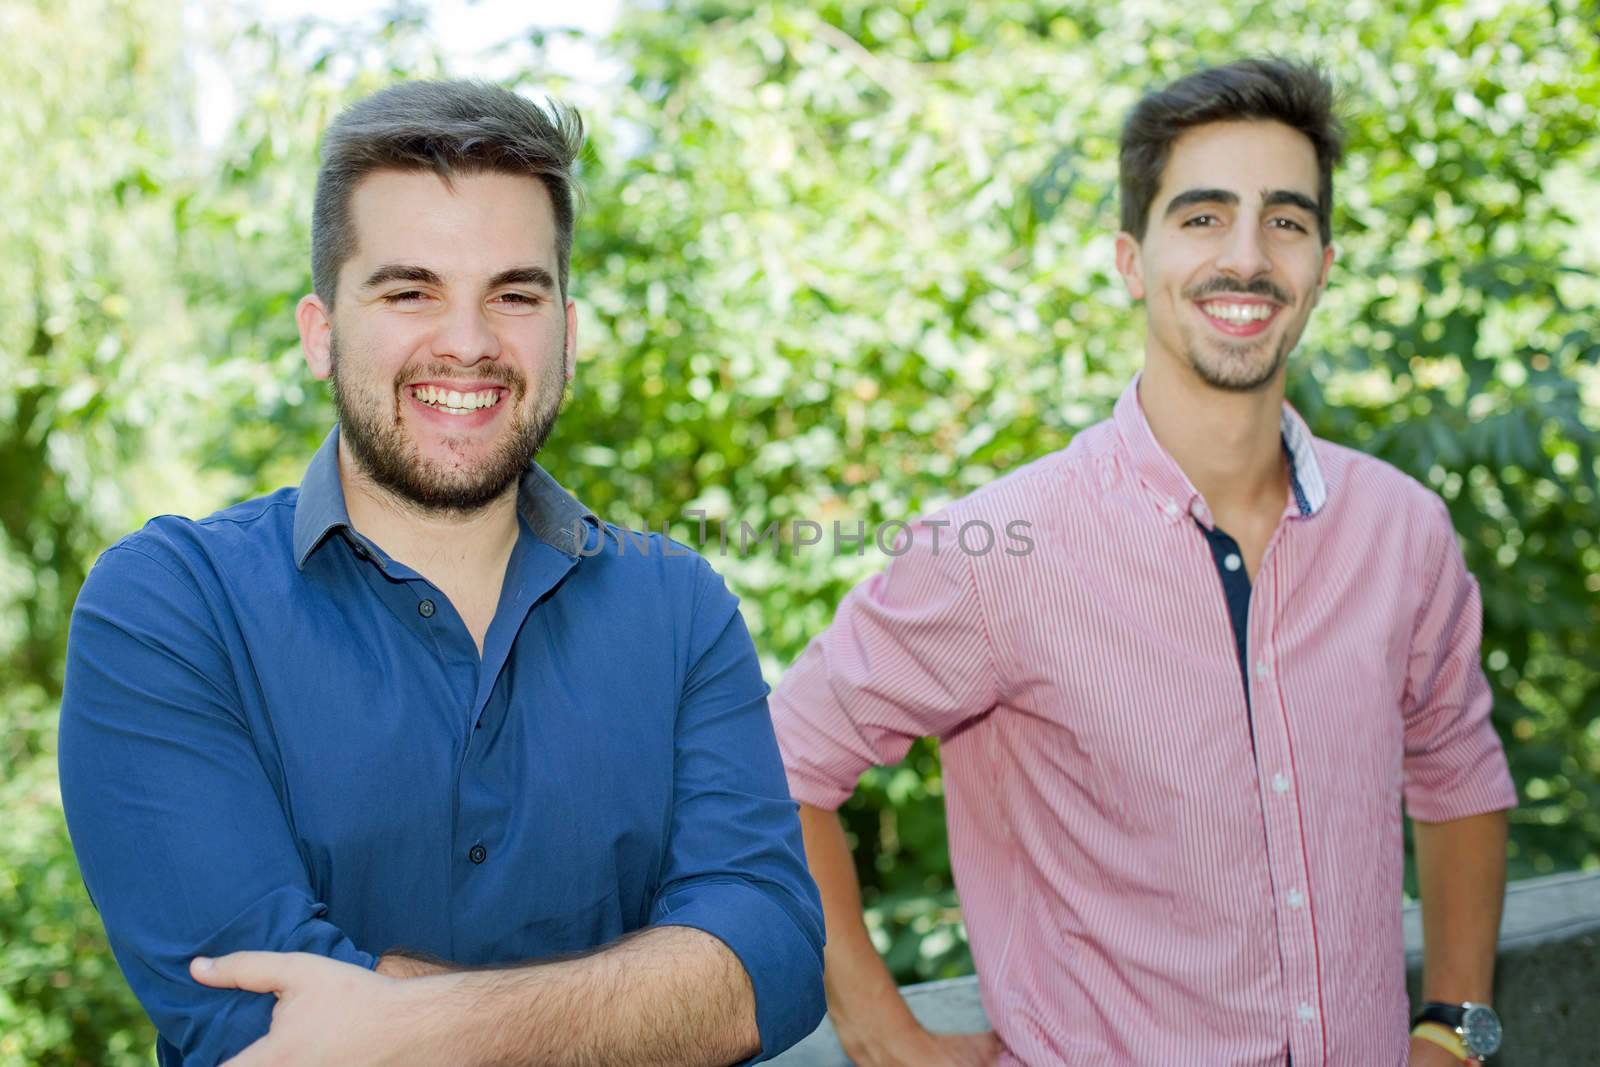 happy young casual men outdoor portrait